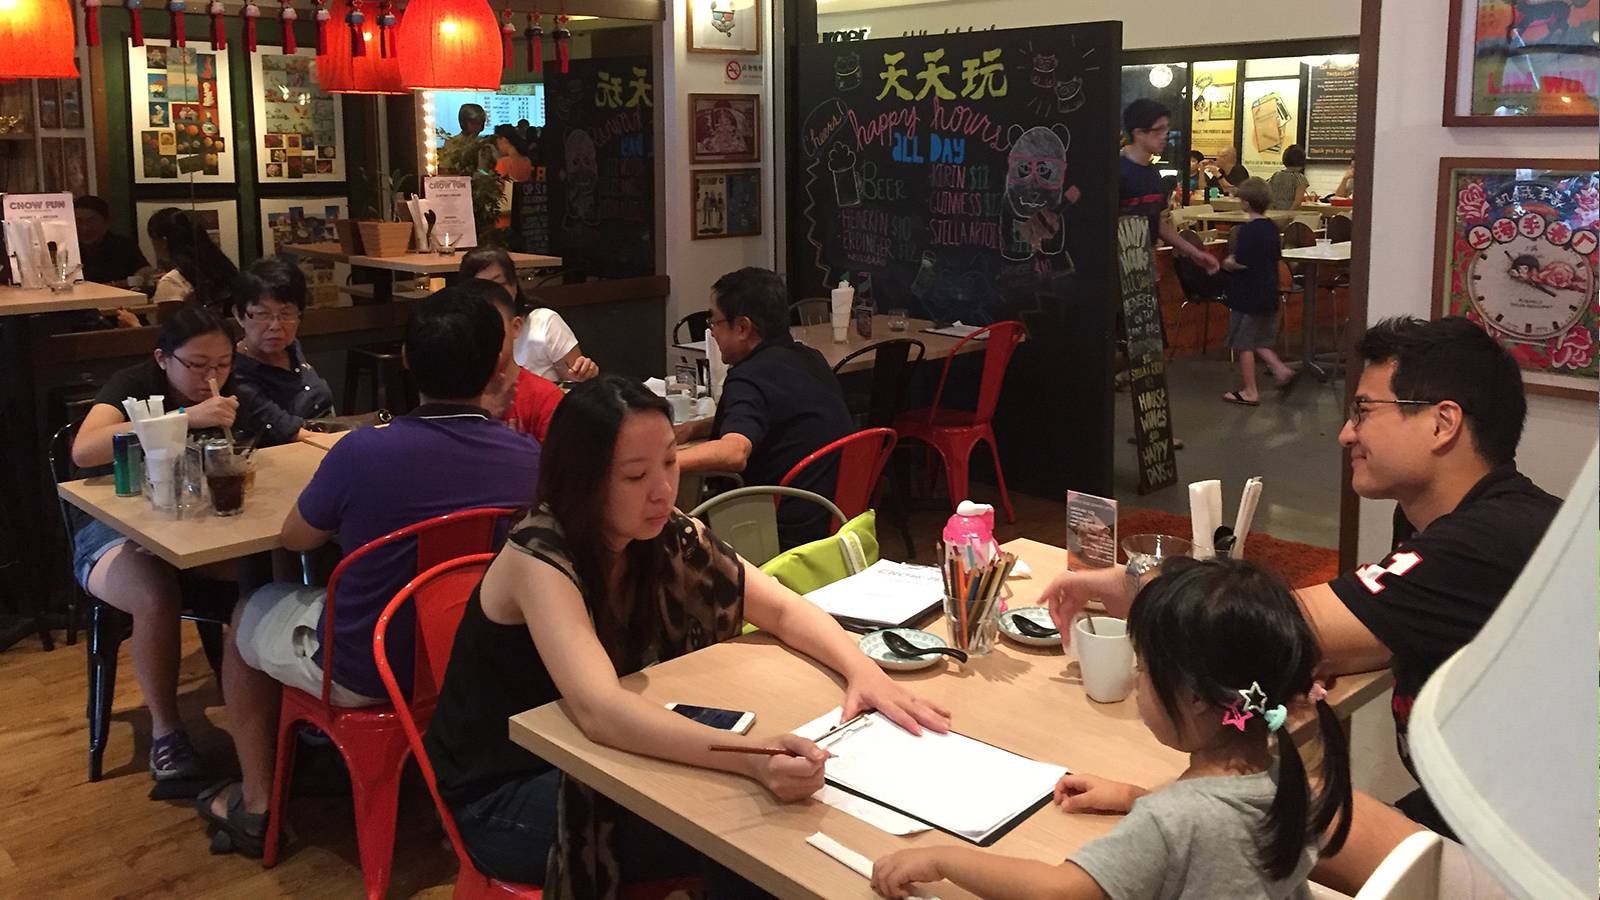 Parents-Restaurant-Review-–-Chow-Fun-Restaurant-&-Bar-INTERIOR